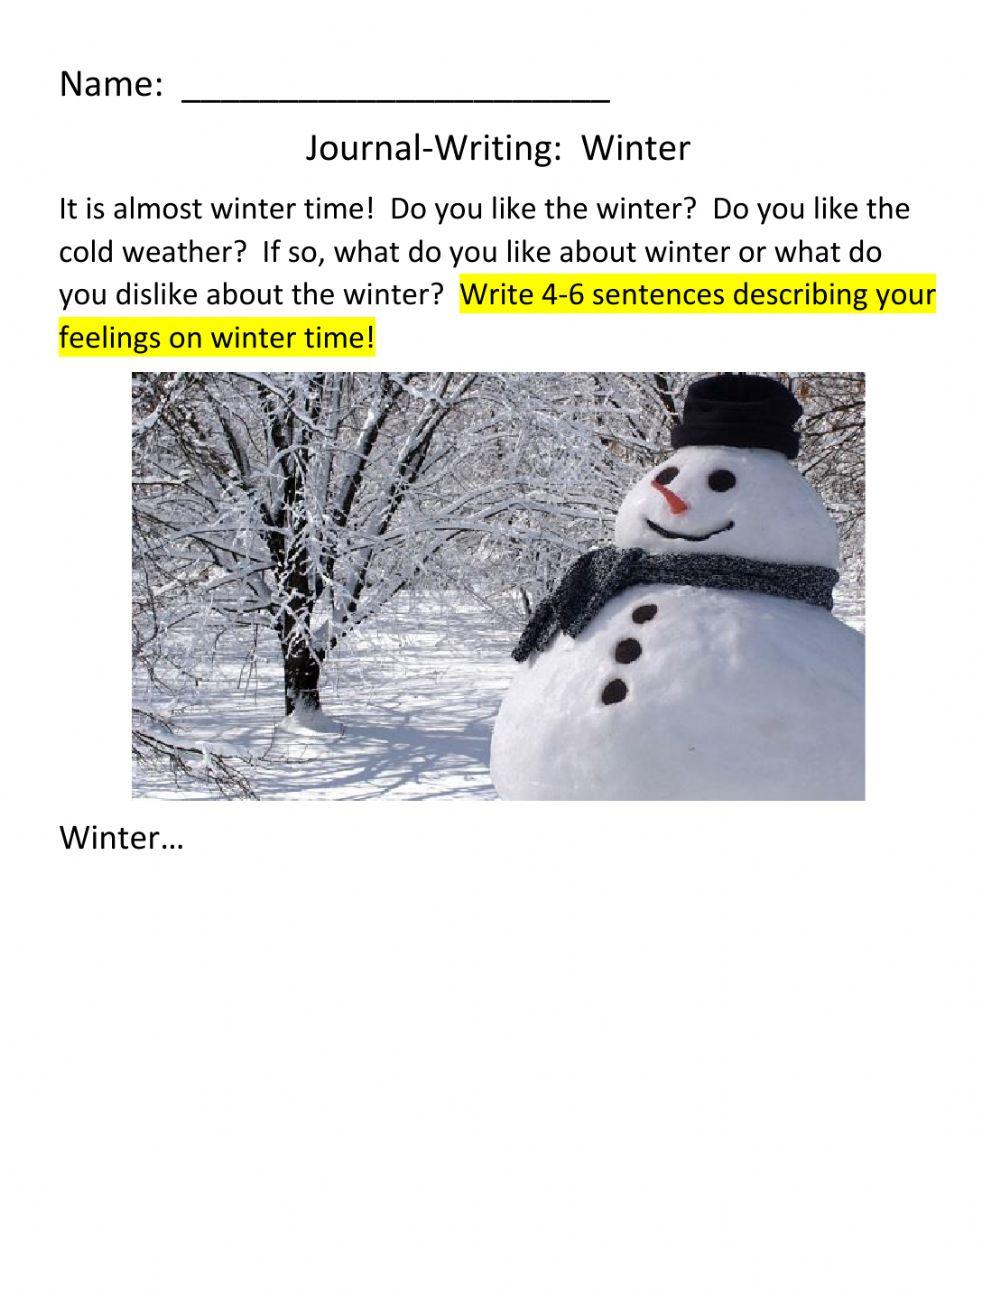 JOURNAL-WRITING:  Winter